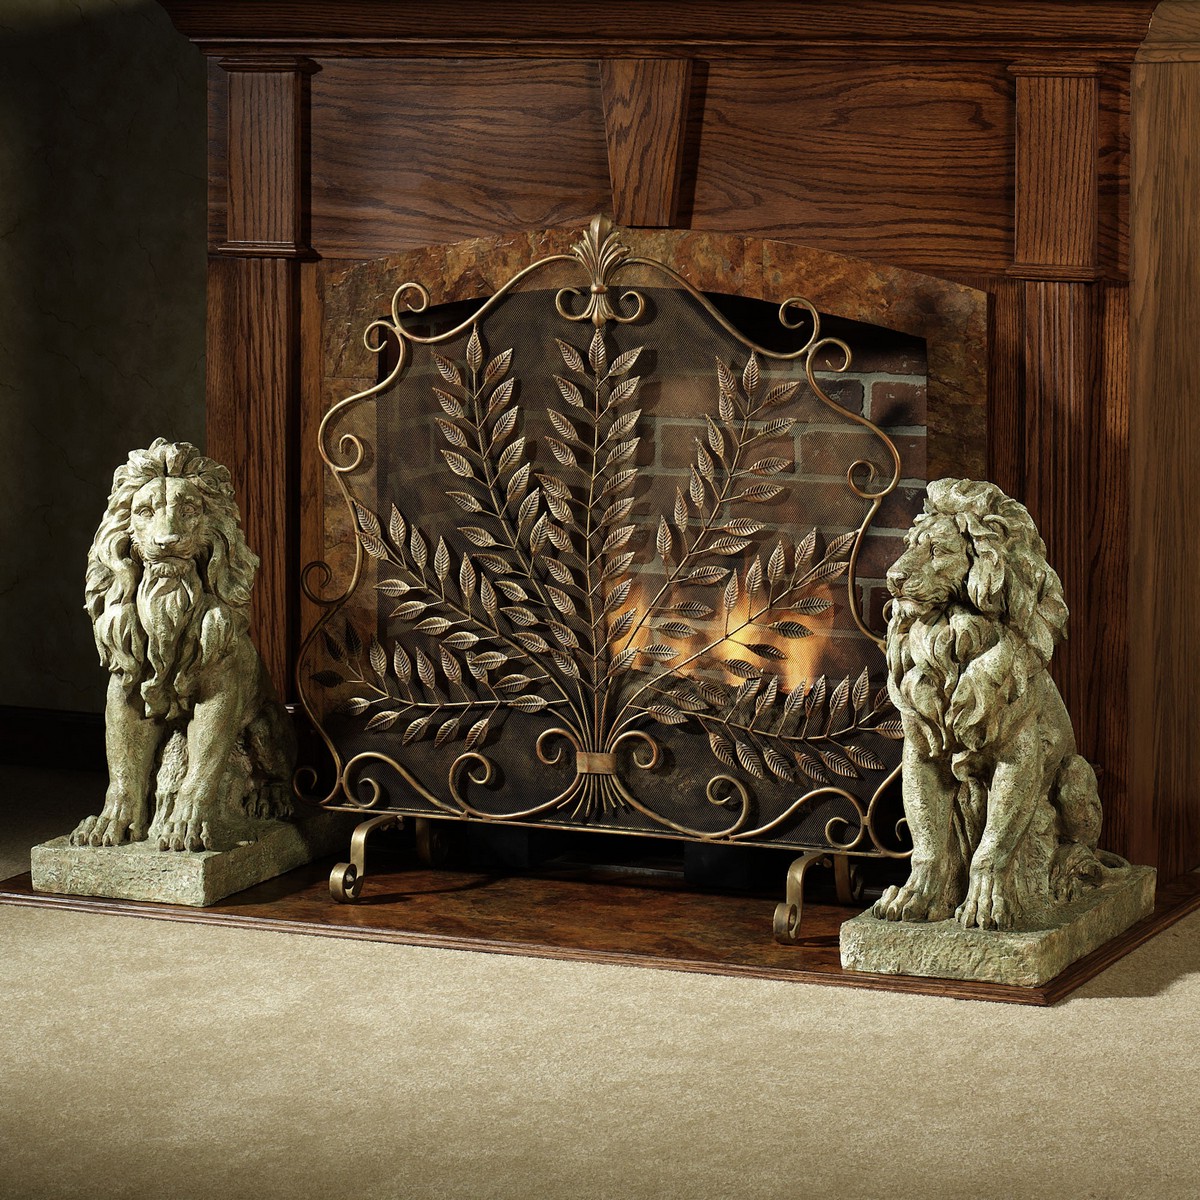 constructing a fireplace screen, dragon fireplace screen, nativity scene fireplace screen, hand-made fireplace screen